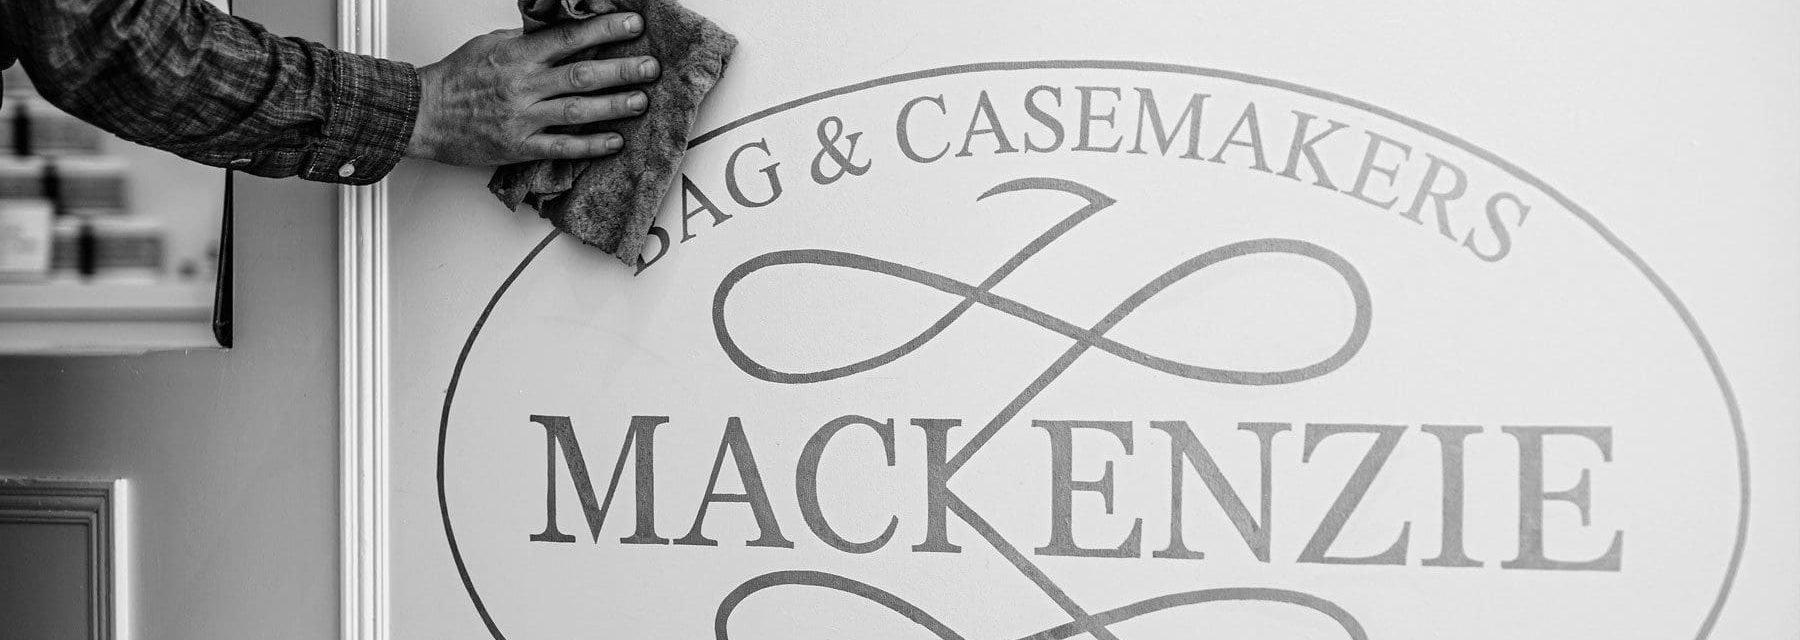 Visit & experience our Store-Mackenzie Leather Edinburgh